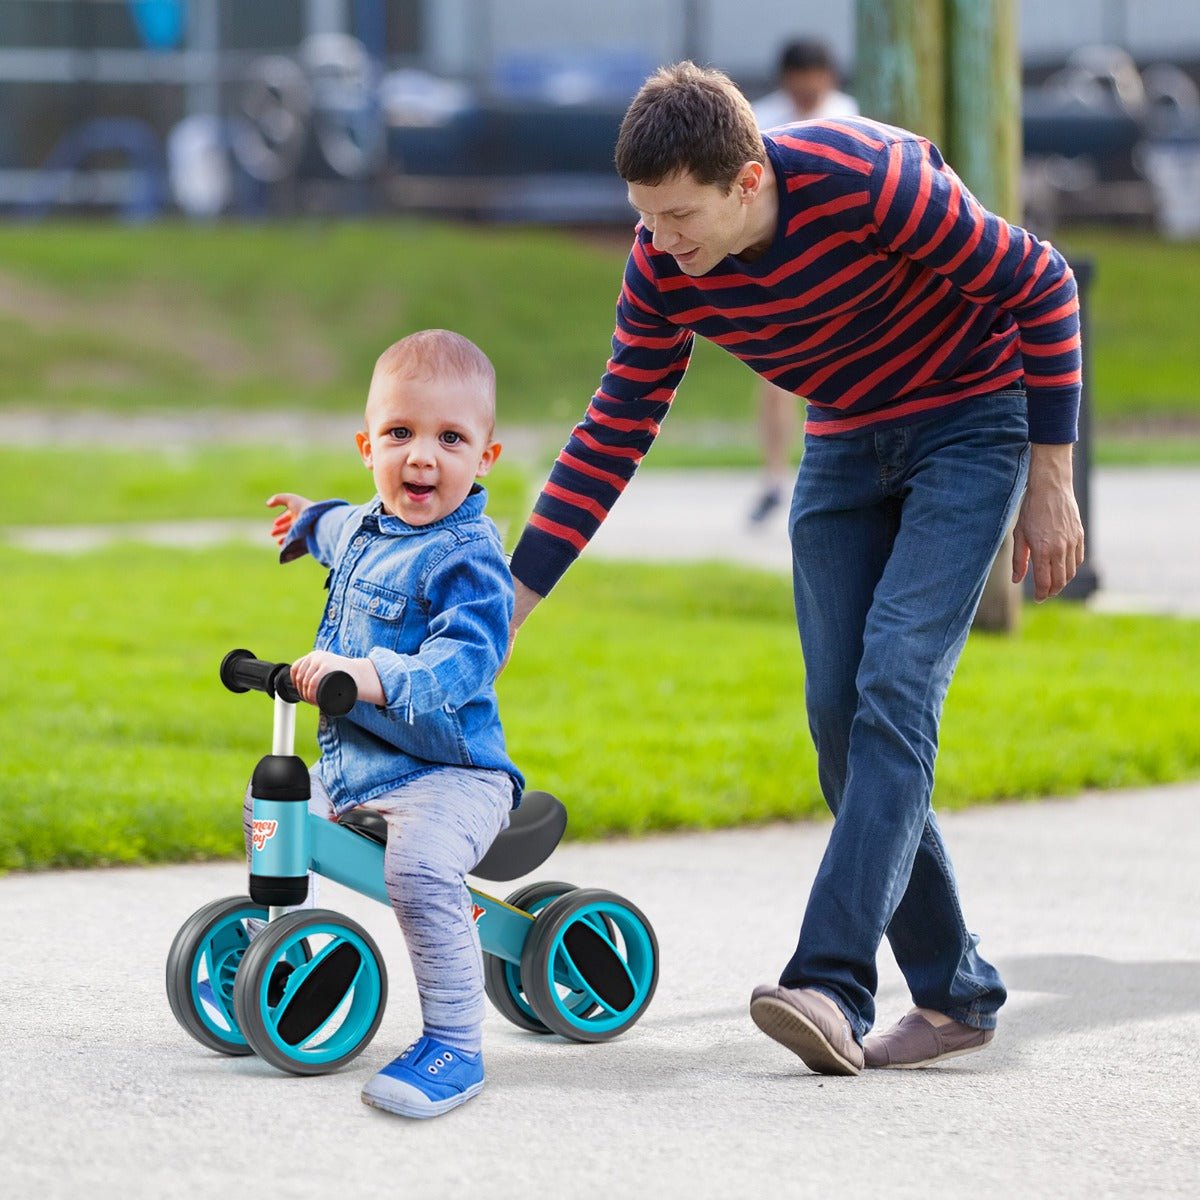 Easy Handling: Blue Baby Balance Bike with 4 Wheels